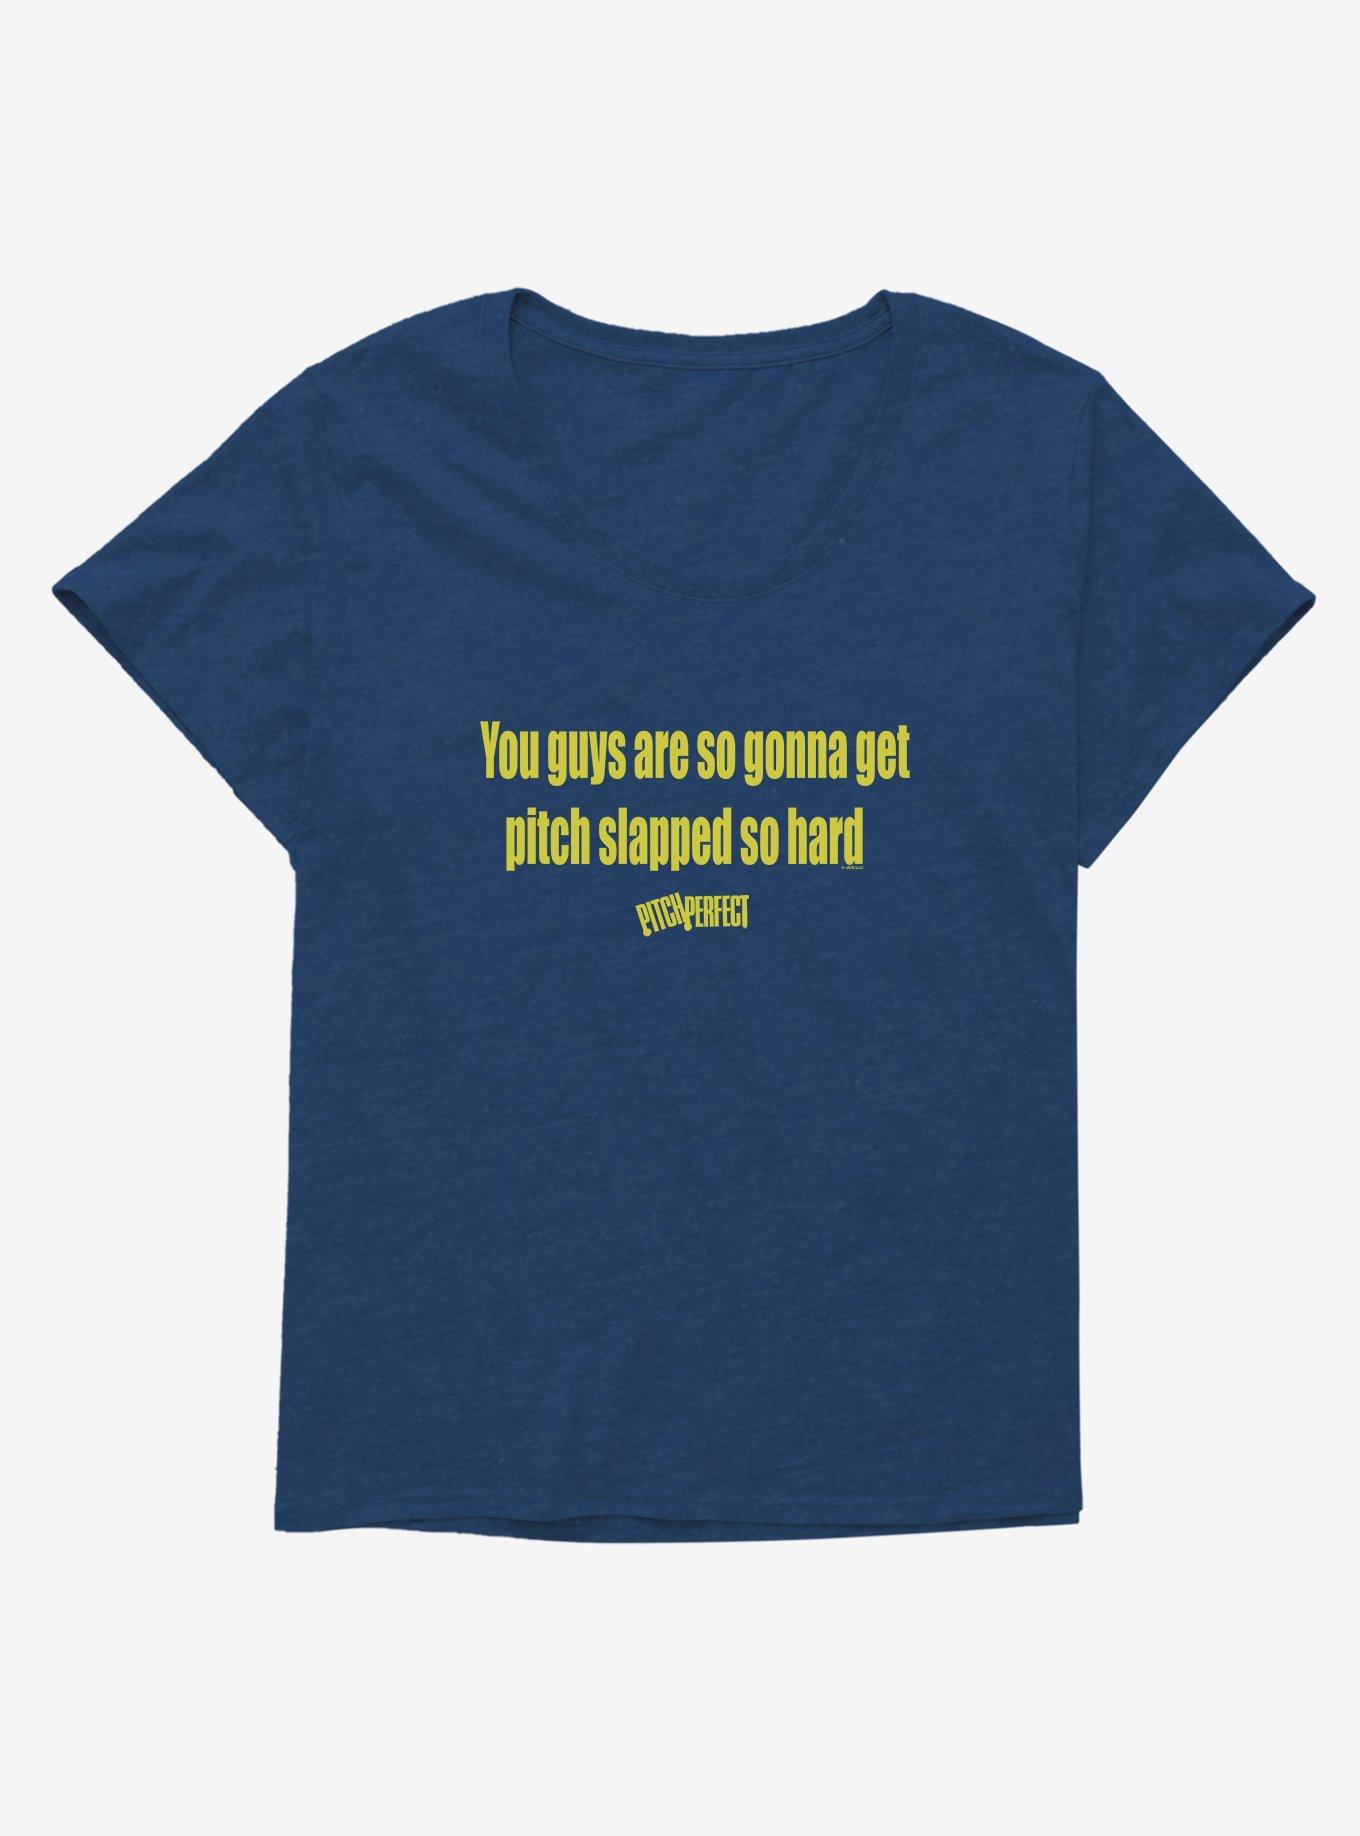 Pitch Perfect Slapped Girls T-Shirt Plus